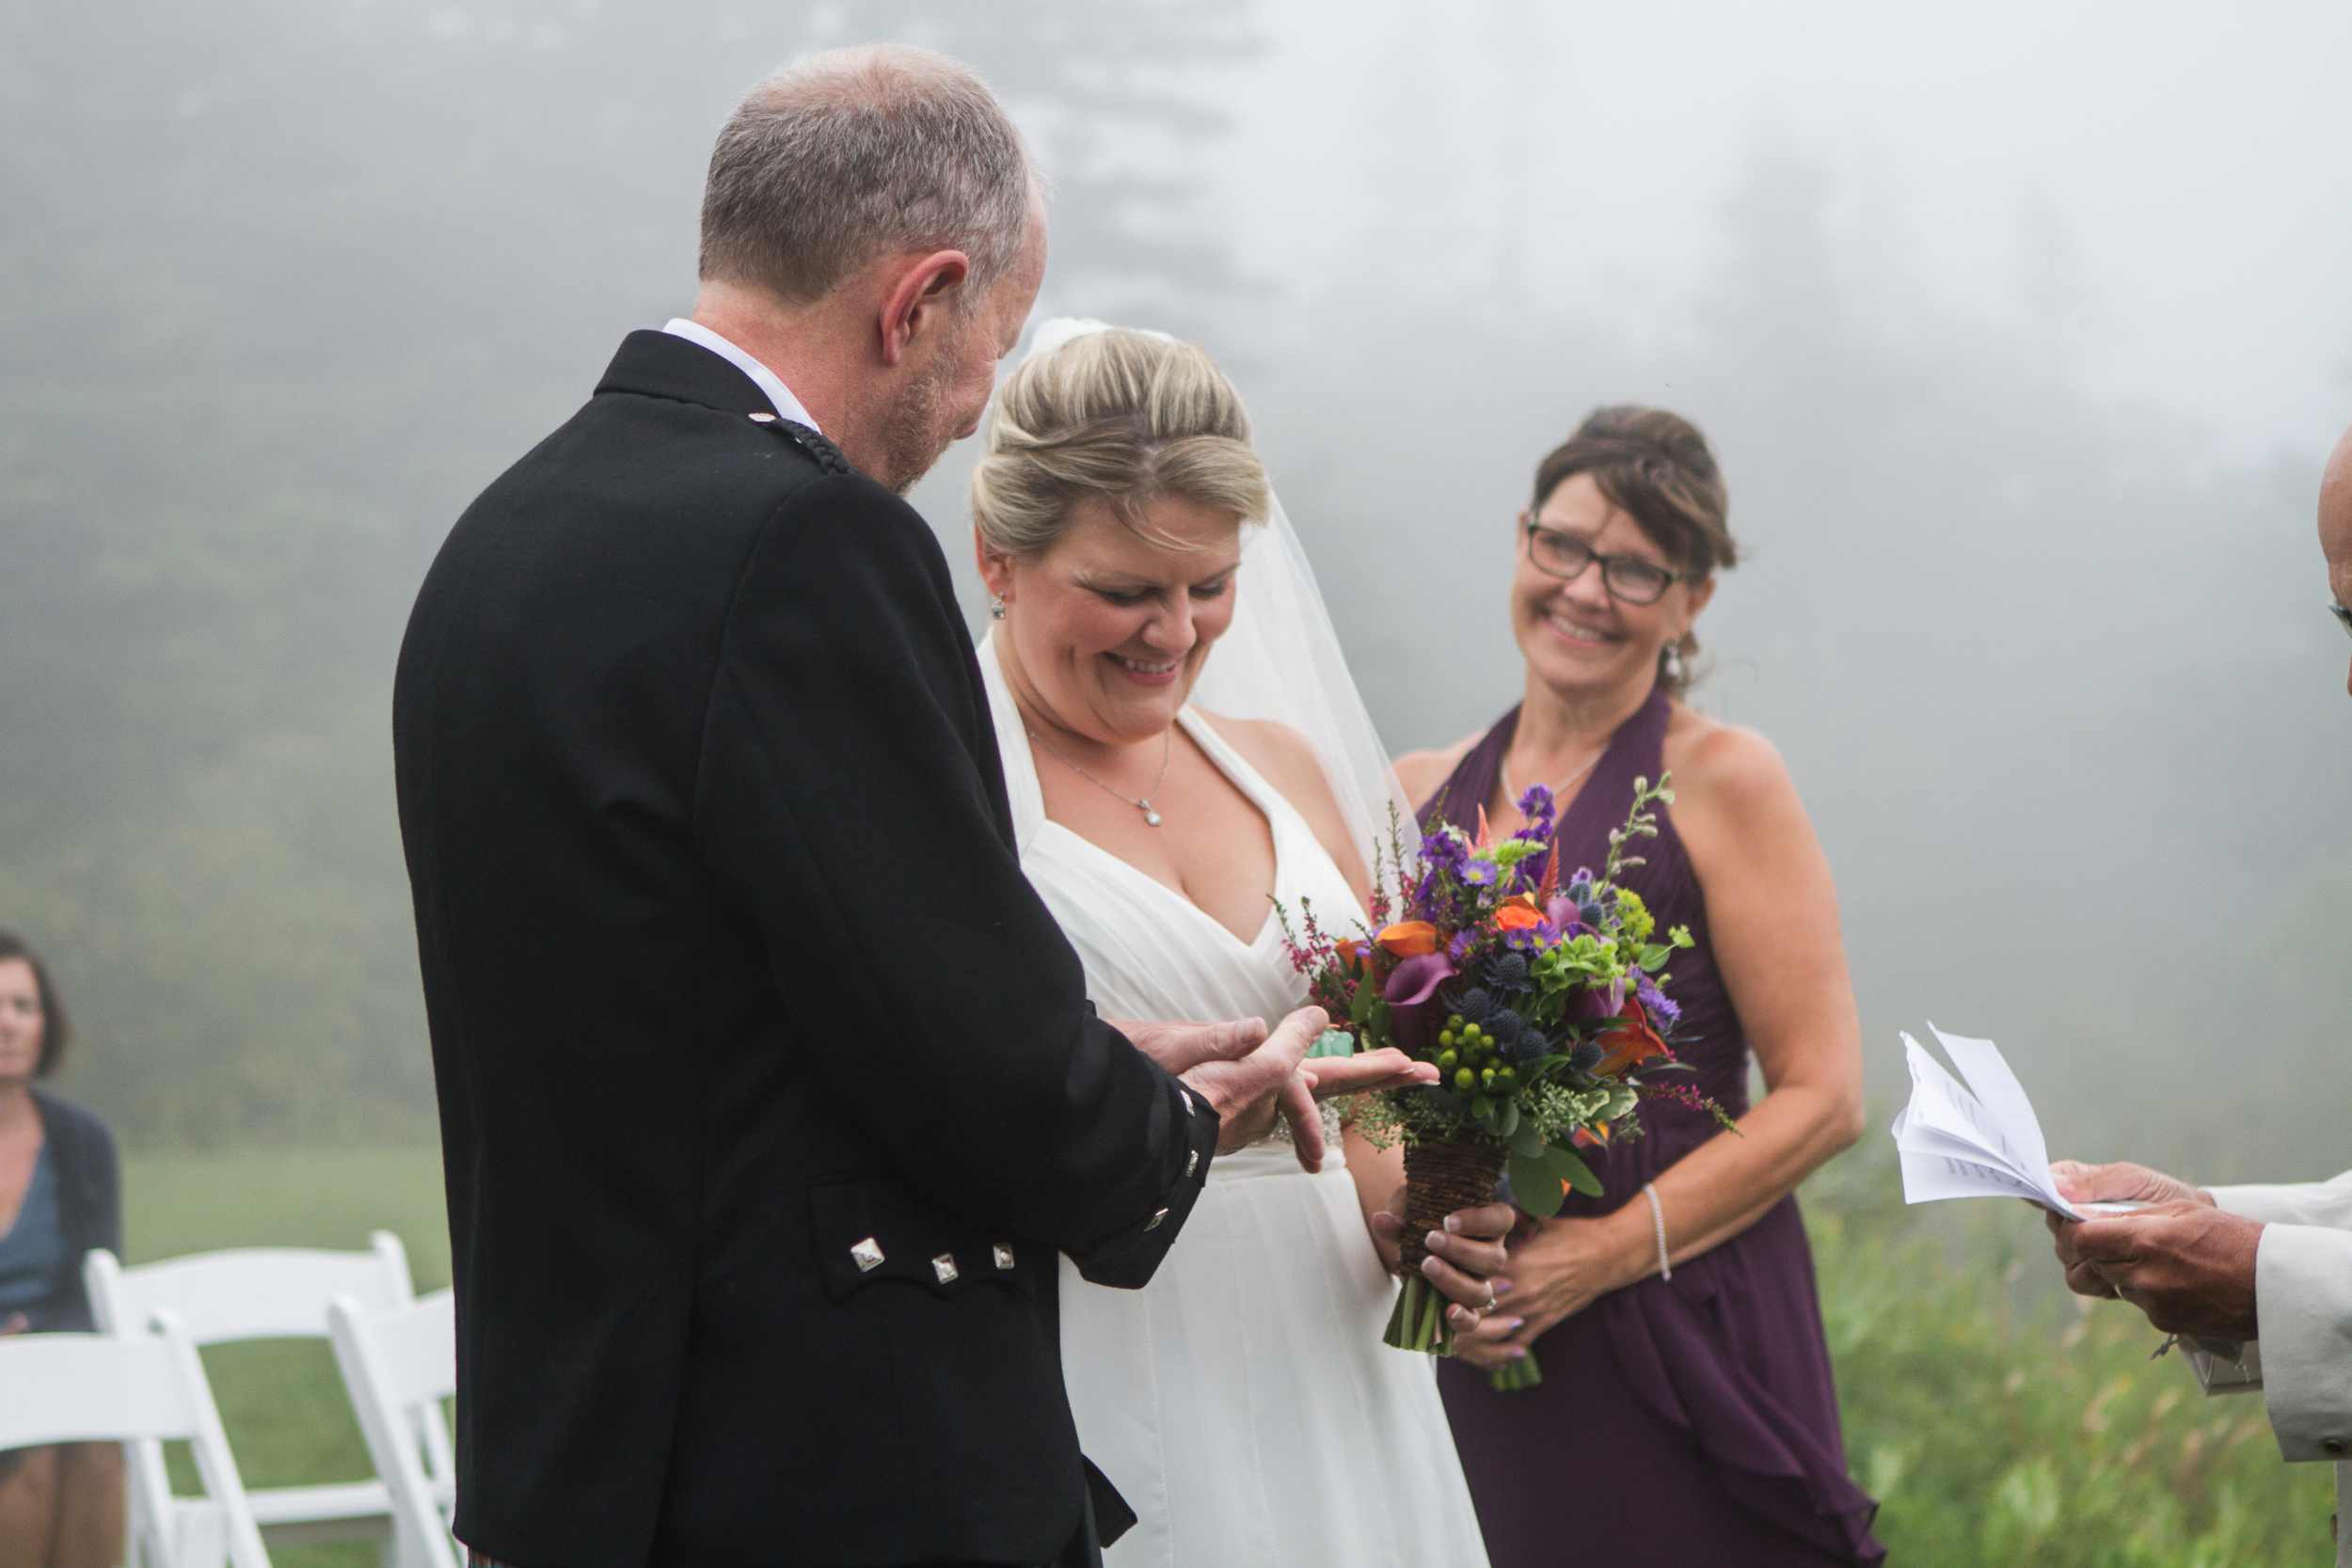 Tiffany and Andy's Bascom Lodge Mountain Wedding Wedding Mt. Greylock Berkshires Massachusetts Shannon Sorensen Photography